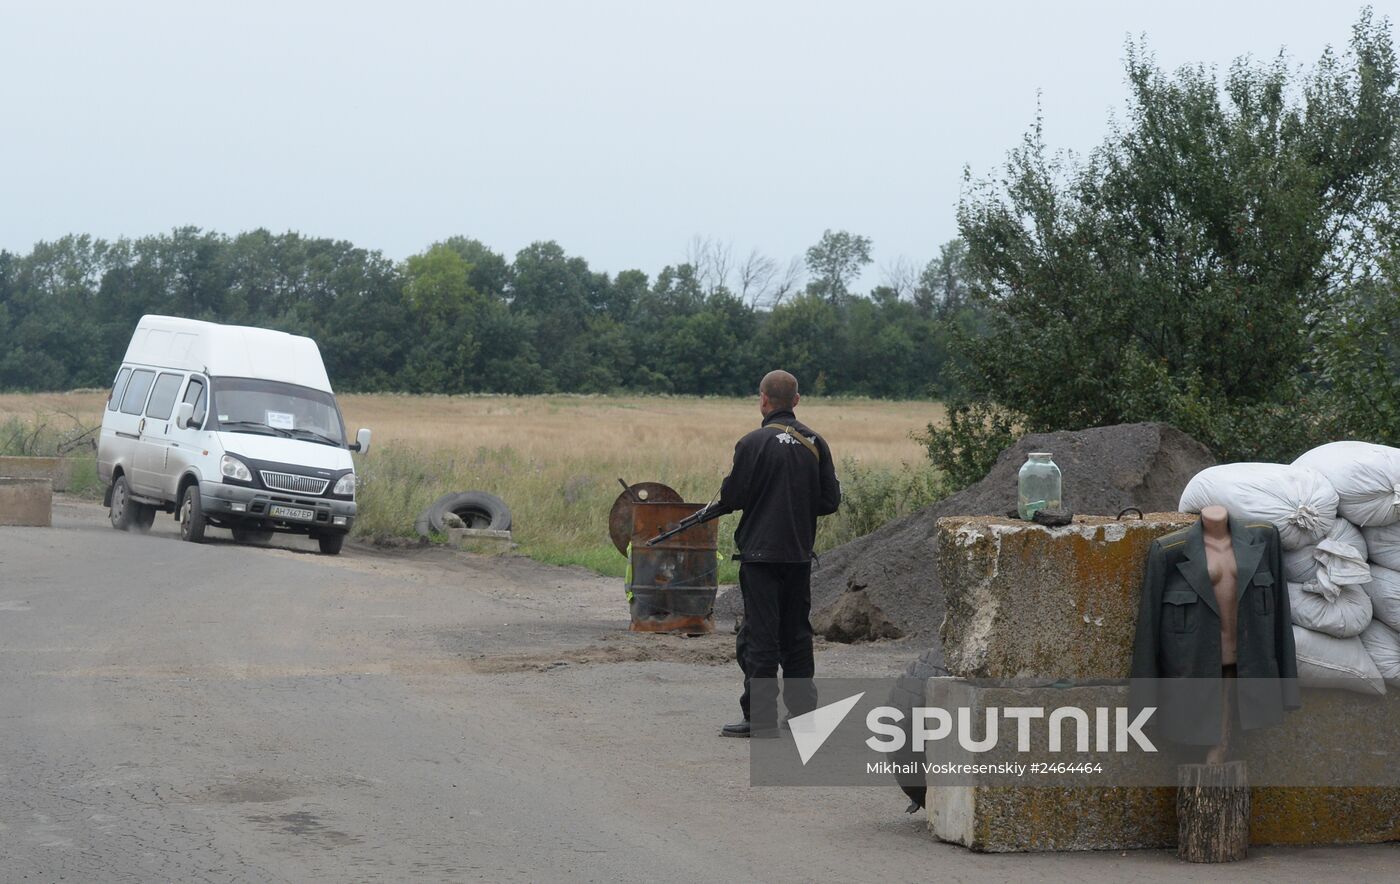 Checkpoint of St. Nicholas Cossack Regiment in Chernukhino, Lugansk Region